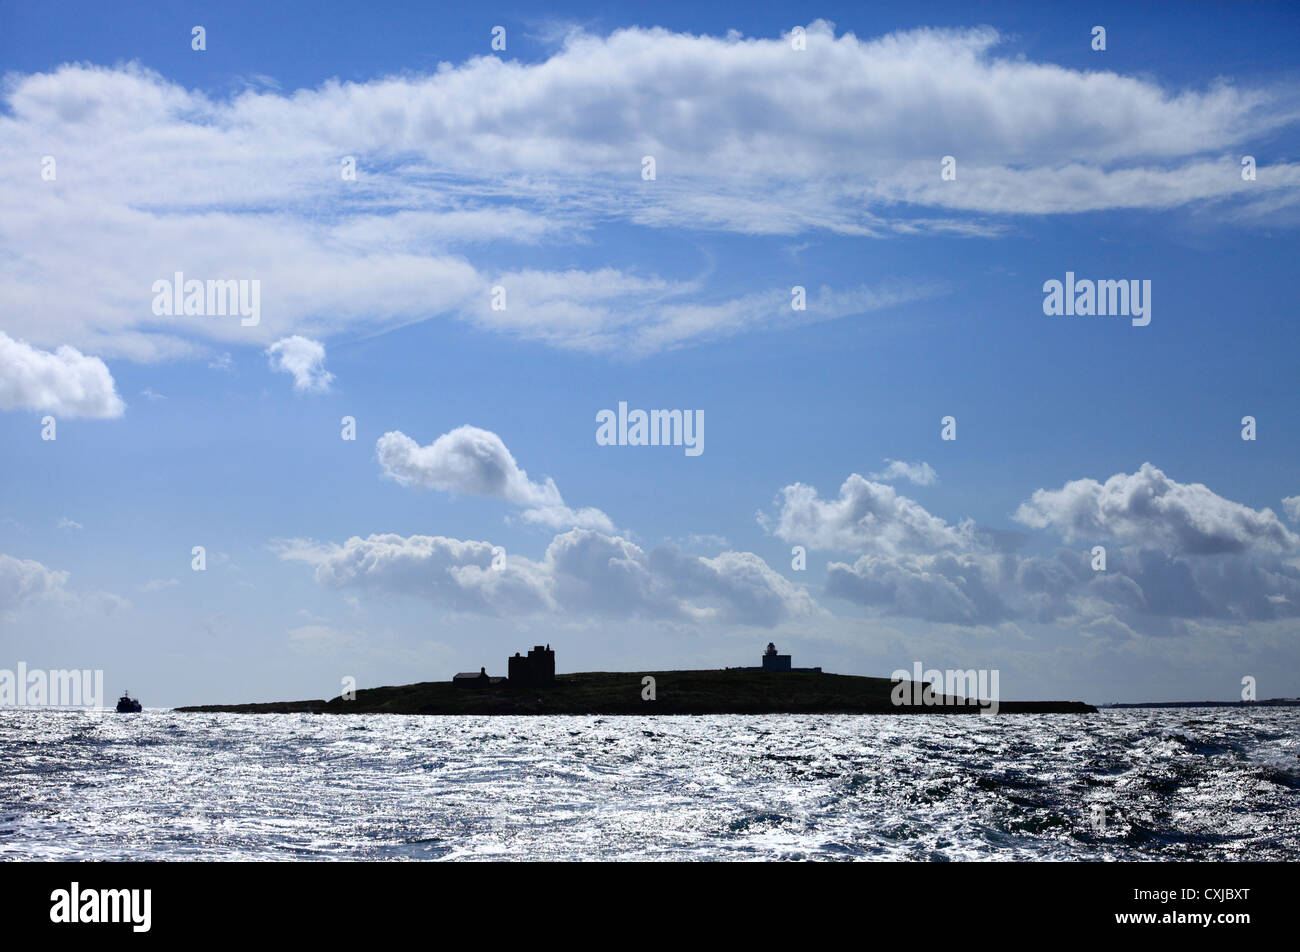 Isla de Farne interior con un barco, rodeando la isla. Foto de stock